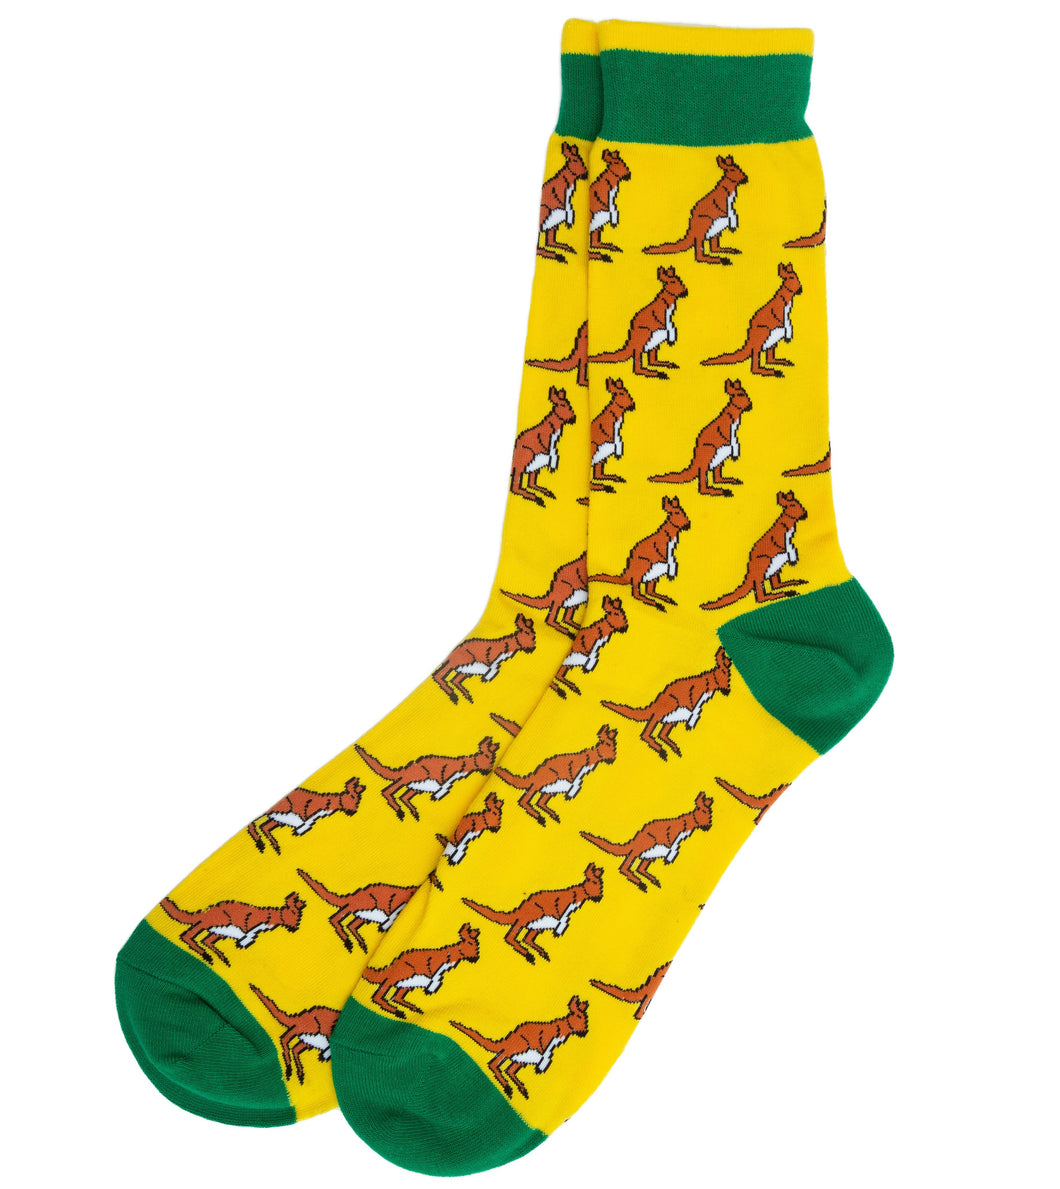 kangaroo socks